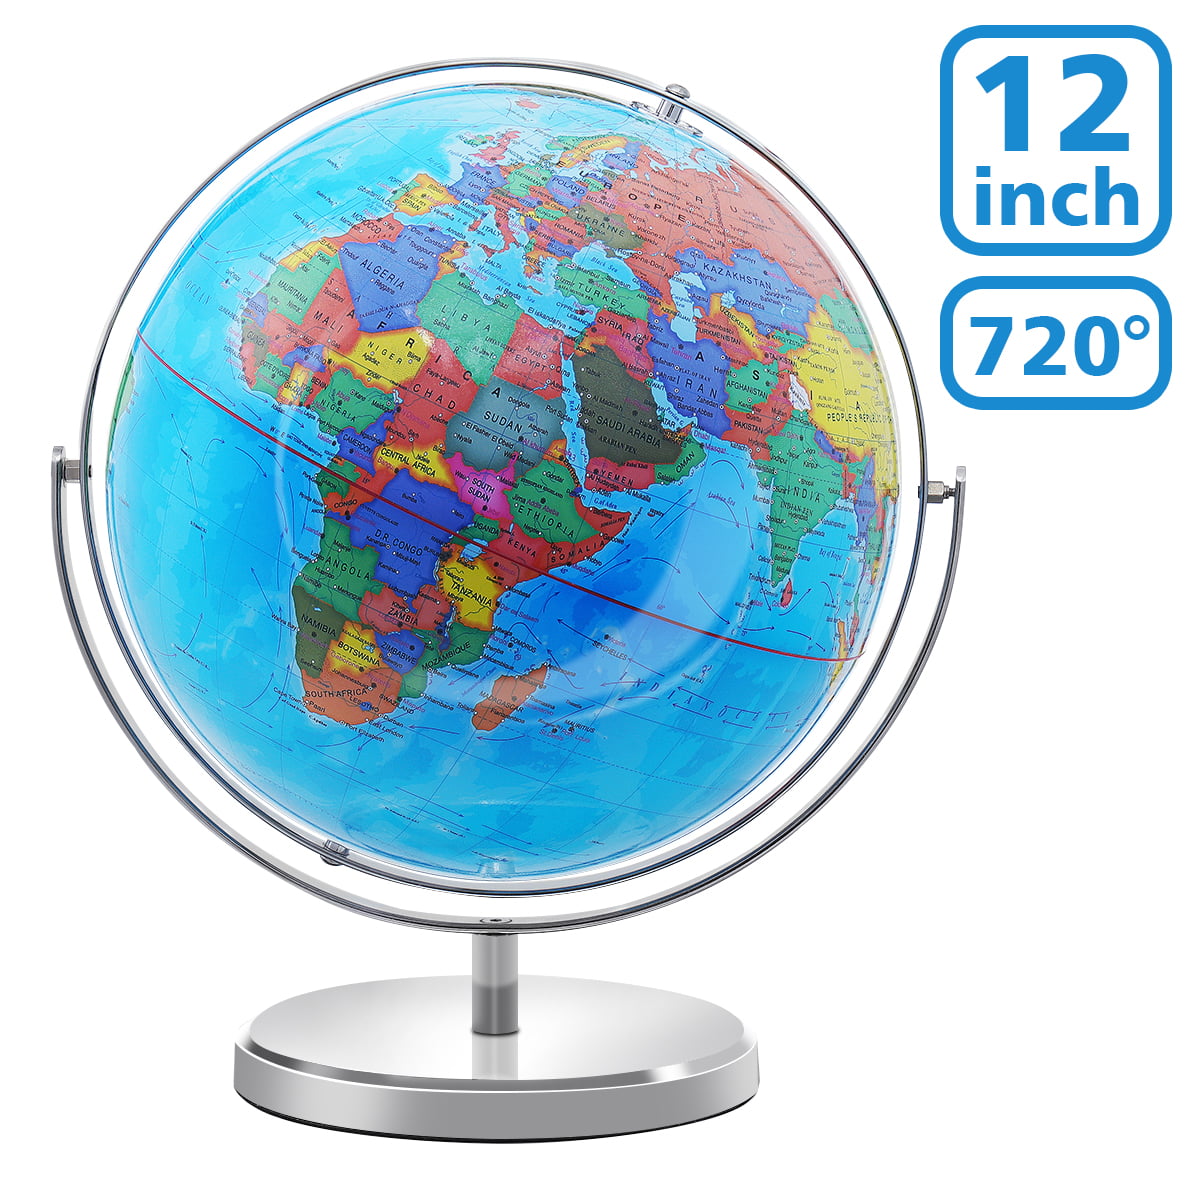 Earth Globe World Map Rotating Classroom Geography Kids Education Desktop 